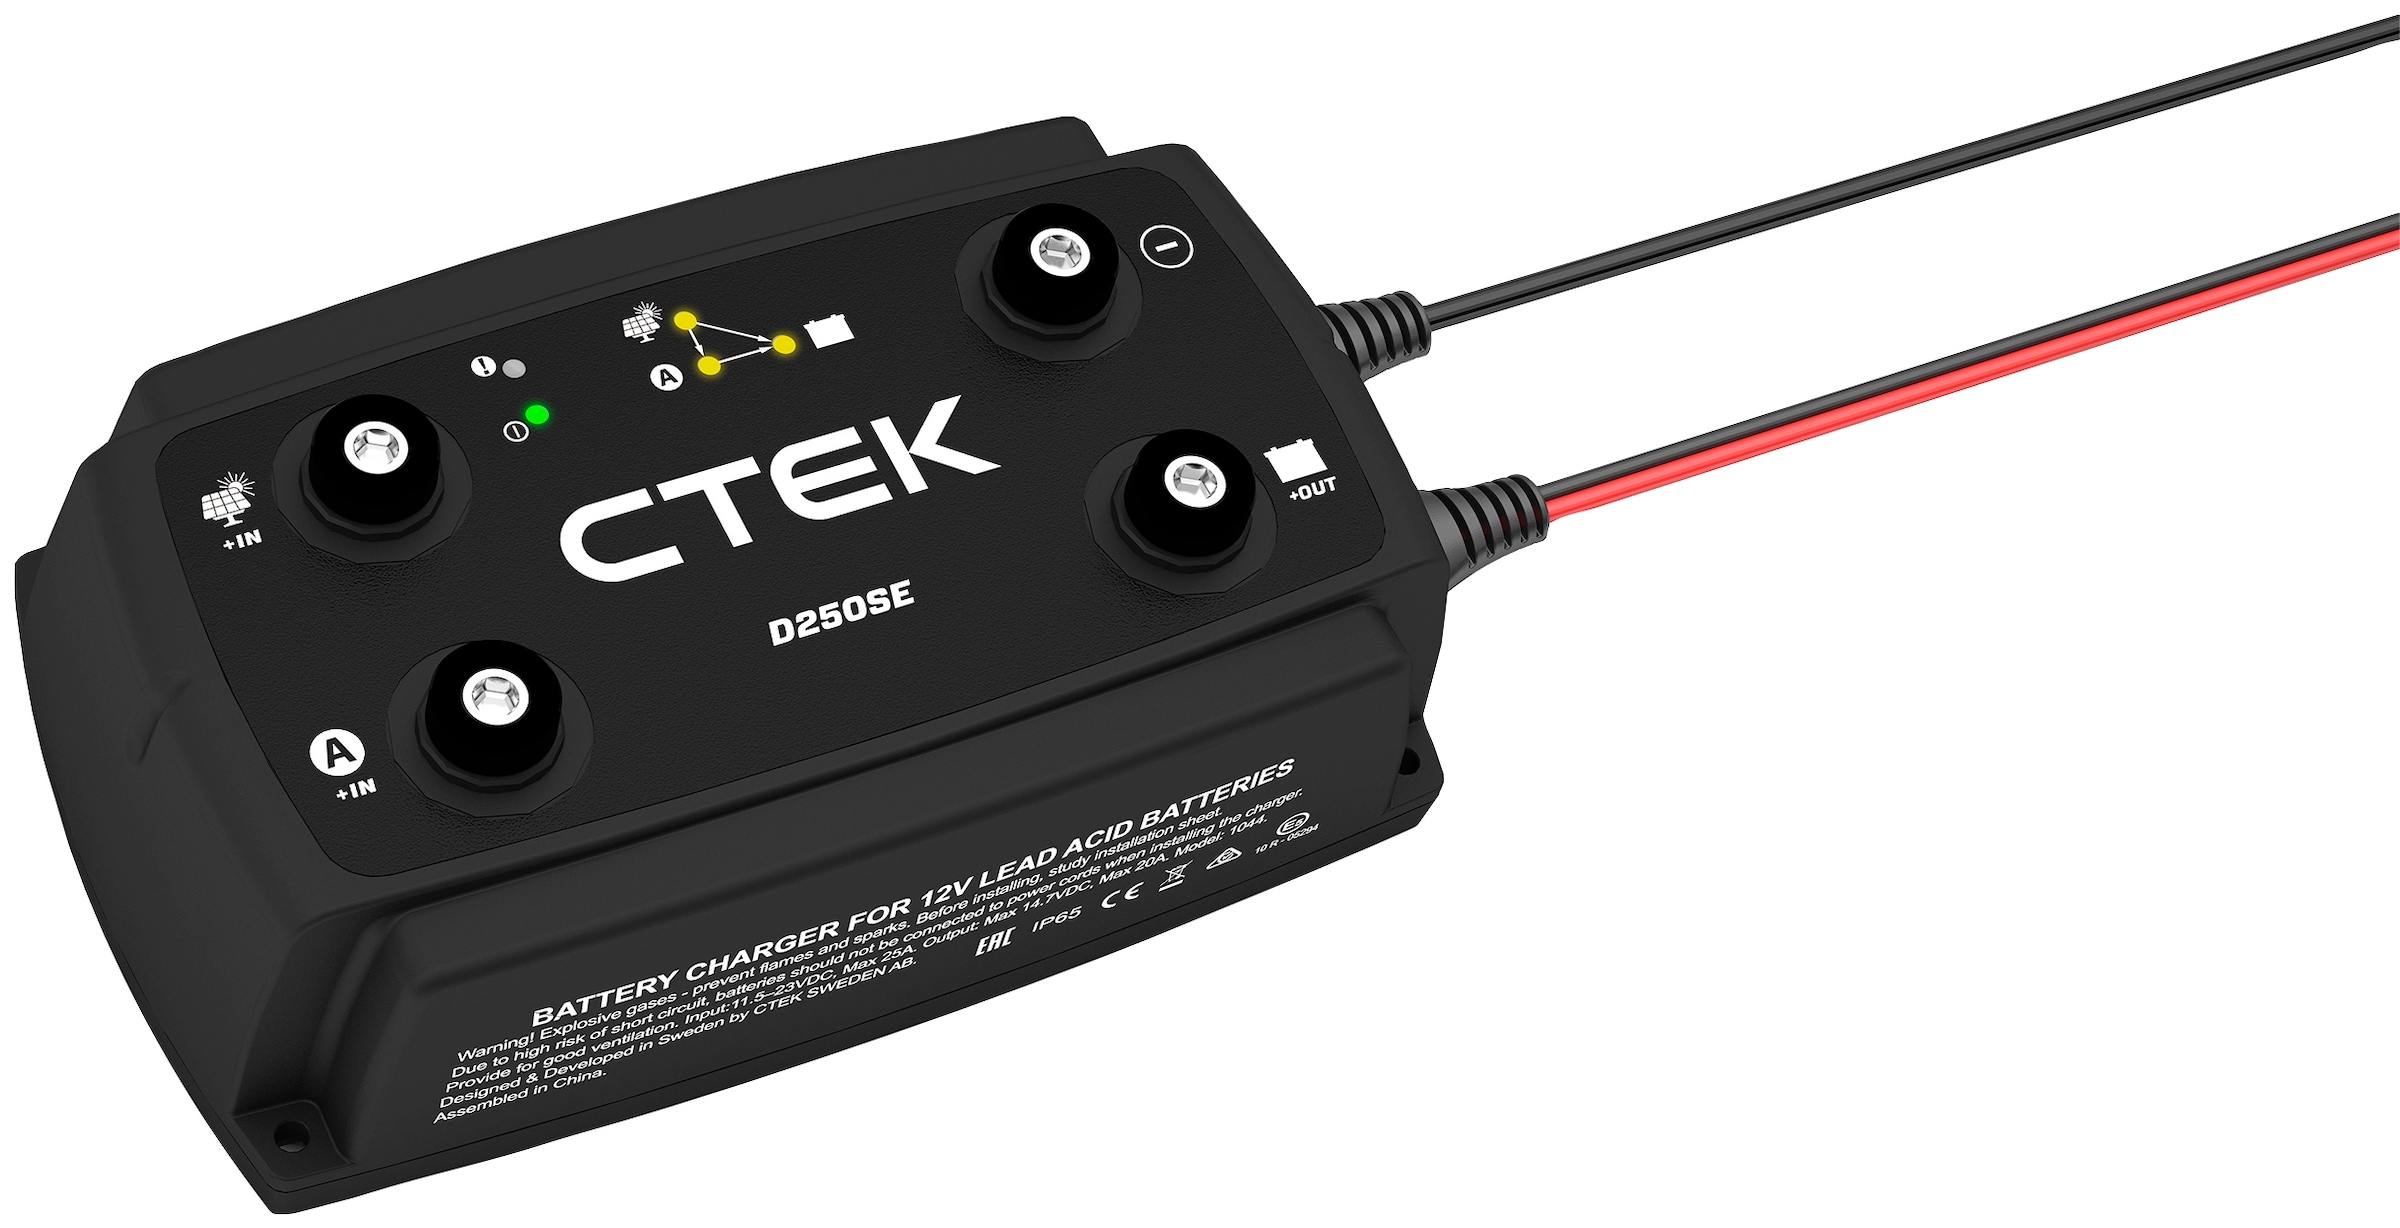 CTEK Batterie-Ladegerät »D250SE«, Temperatursensor zur Optimierung des Ladevorgangs in kalten Umgebungen